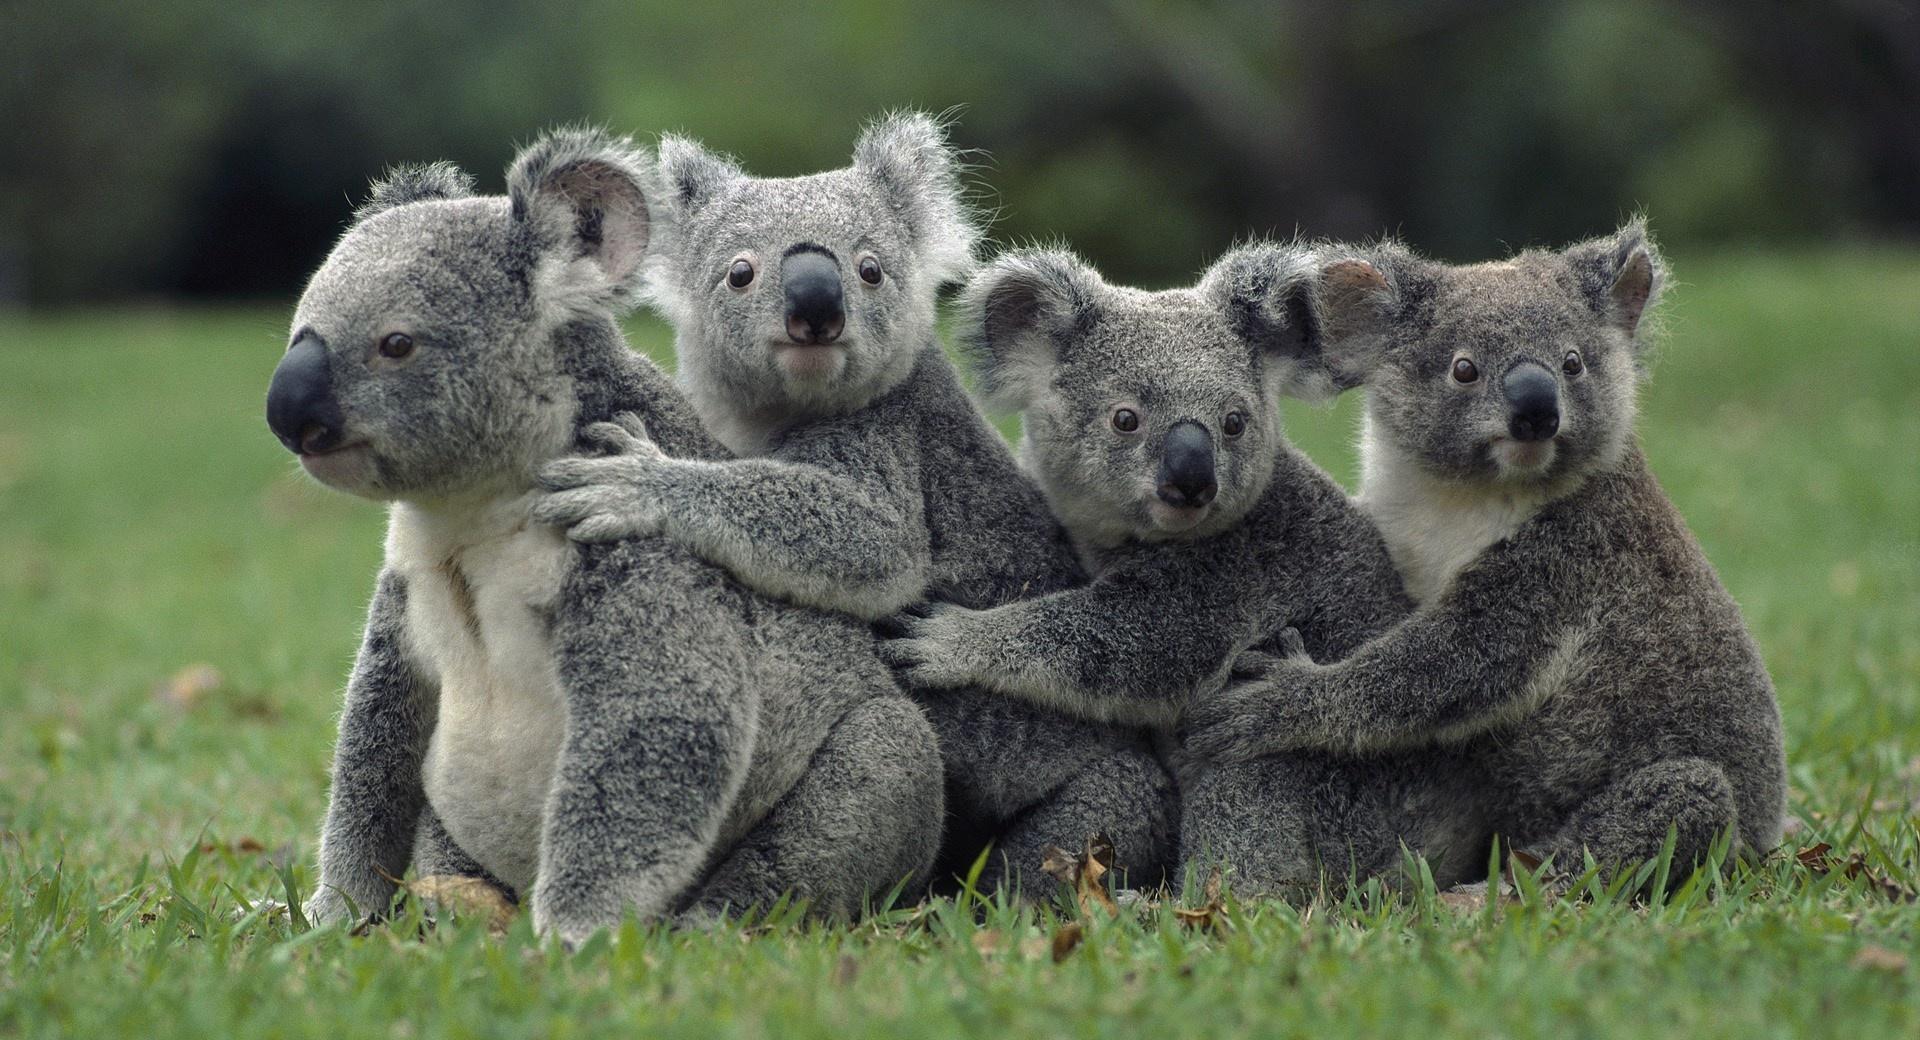 Funny Cute Koalas at 1024 x 1024 iPad size wallpapers HD quality